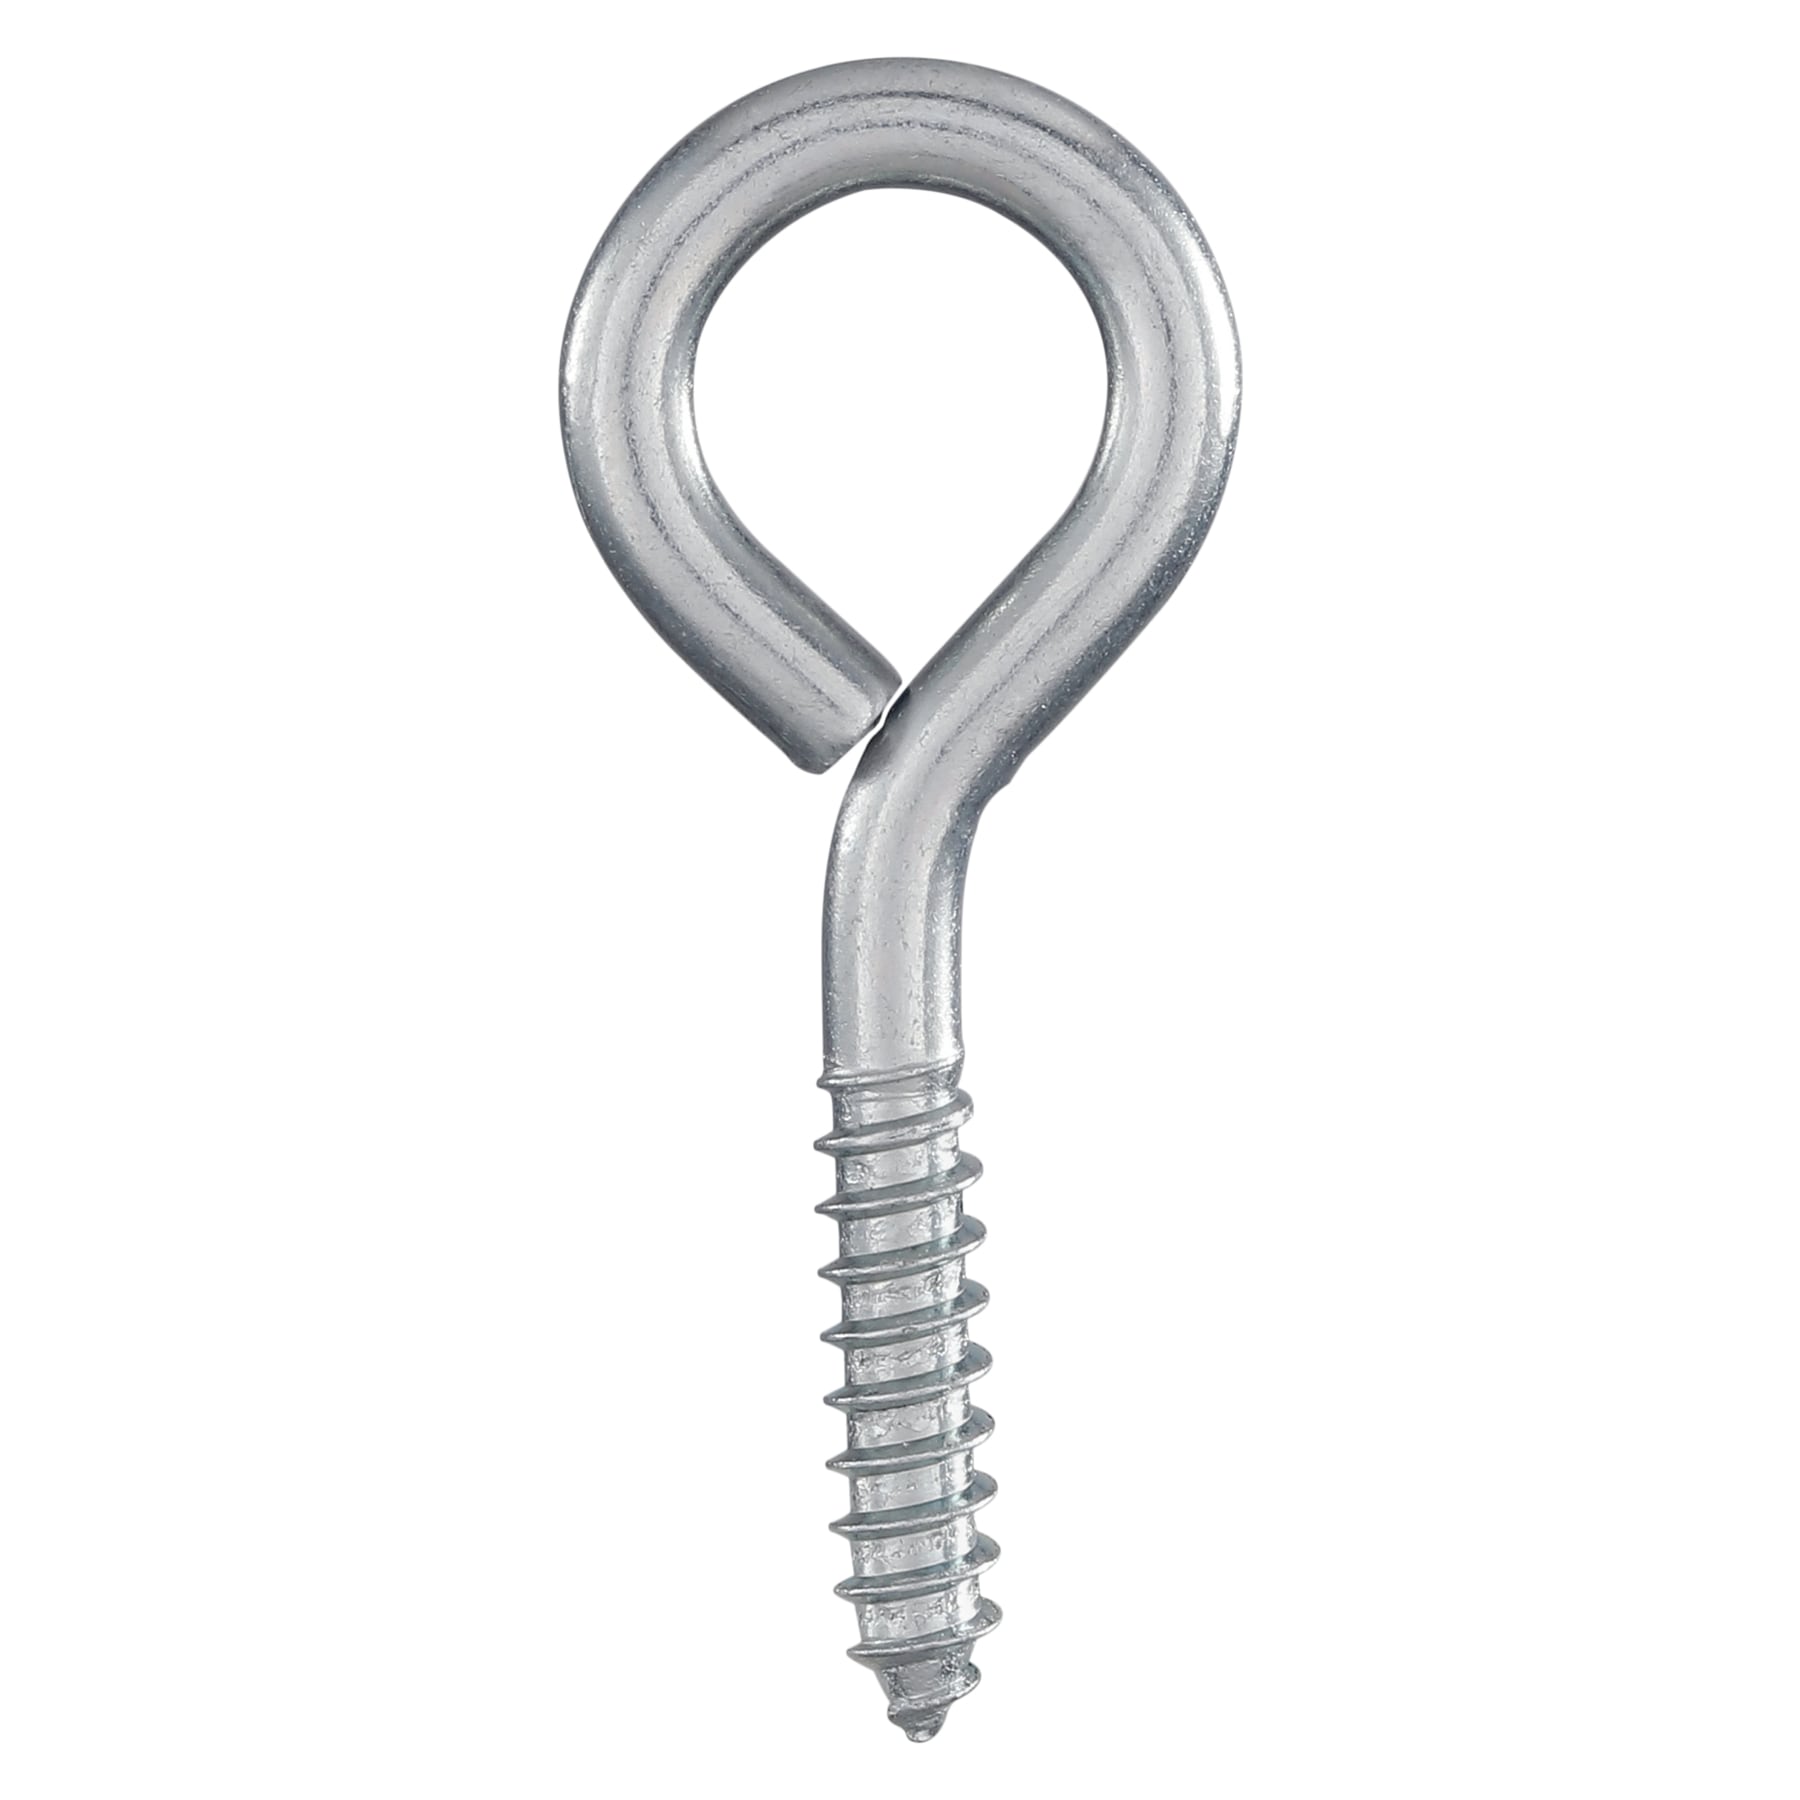 Buy Eyelet screw with wood screw thread, zinc plated online